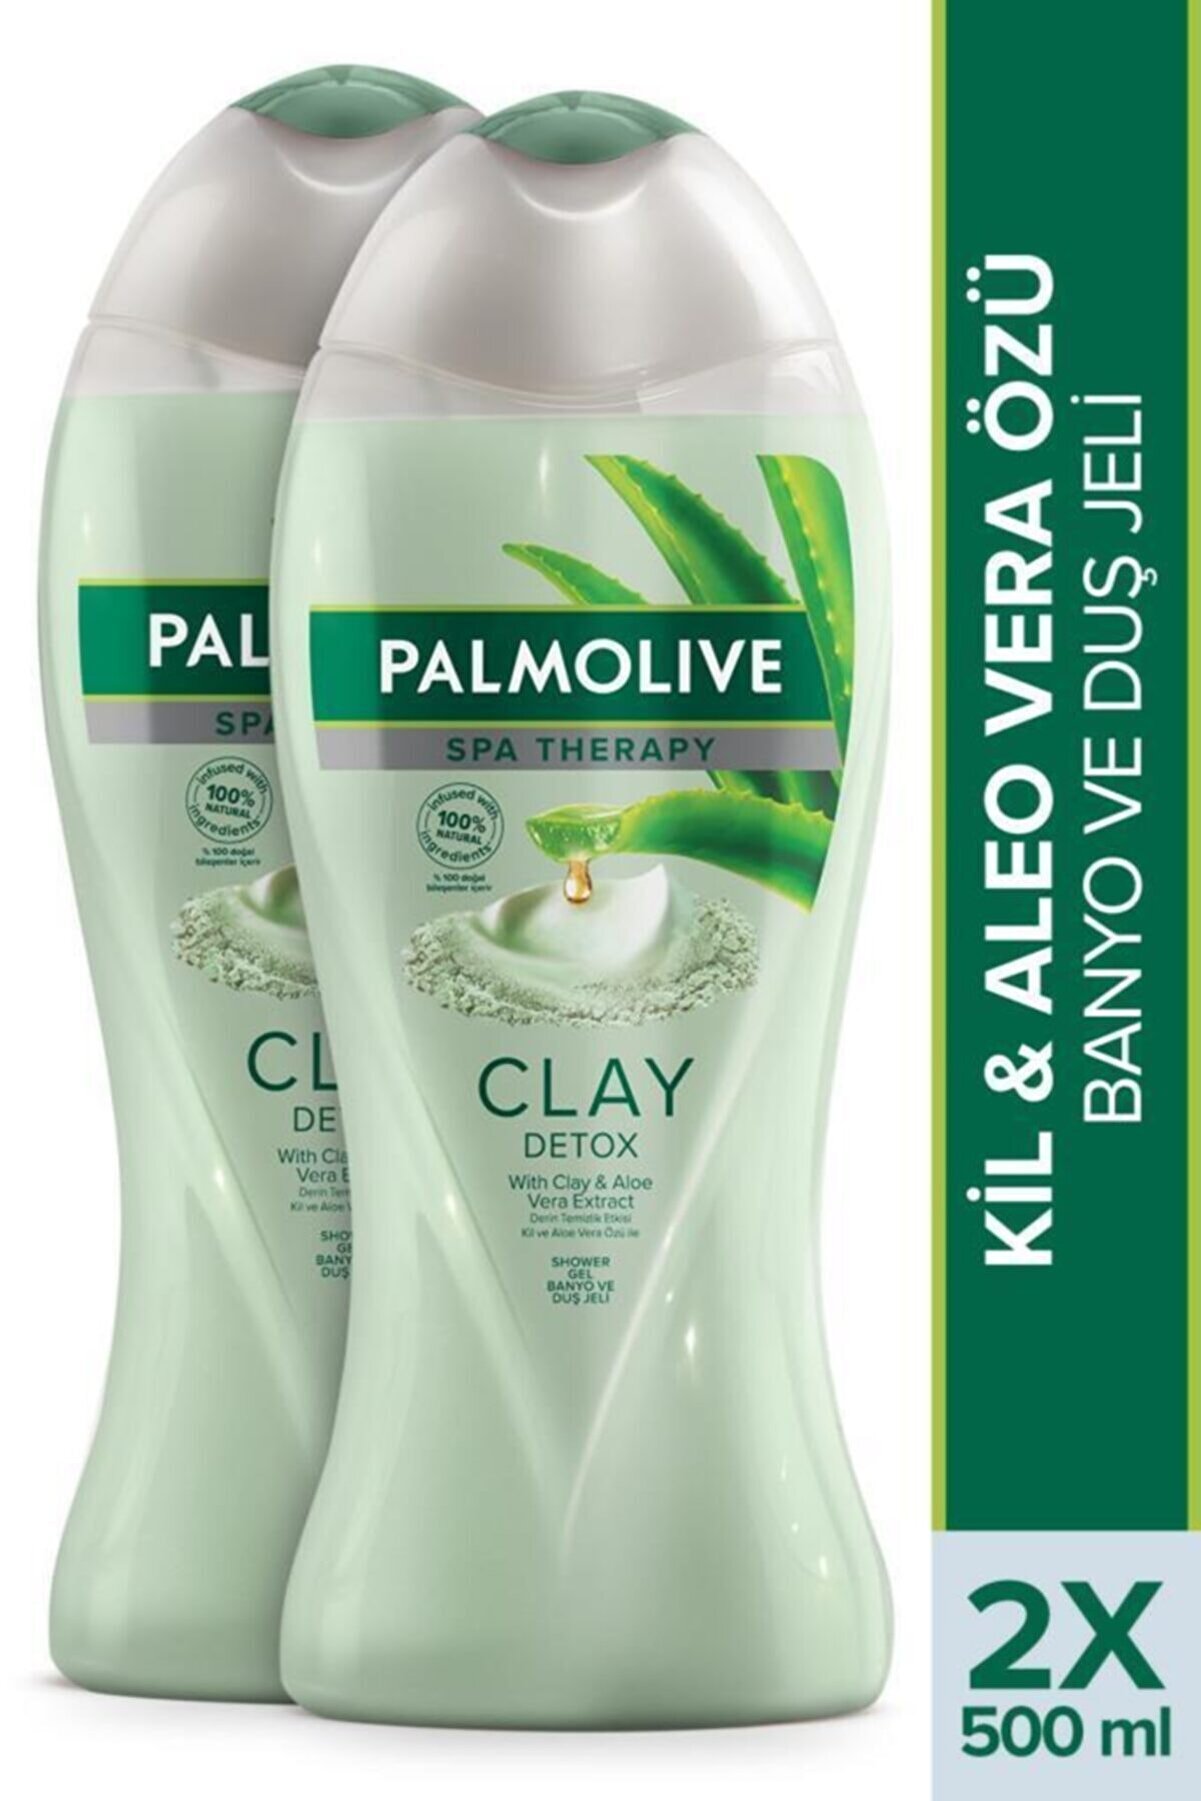 Palmolive Spa Therapy Clay Detox Kil Ve Aloe Vera Özü Banyo Ve Duş Jeli 2 X 500 ml